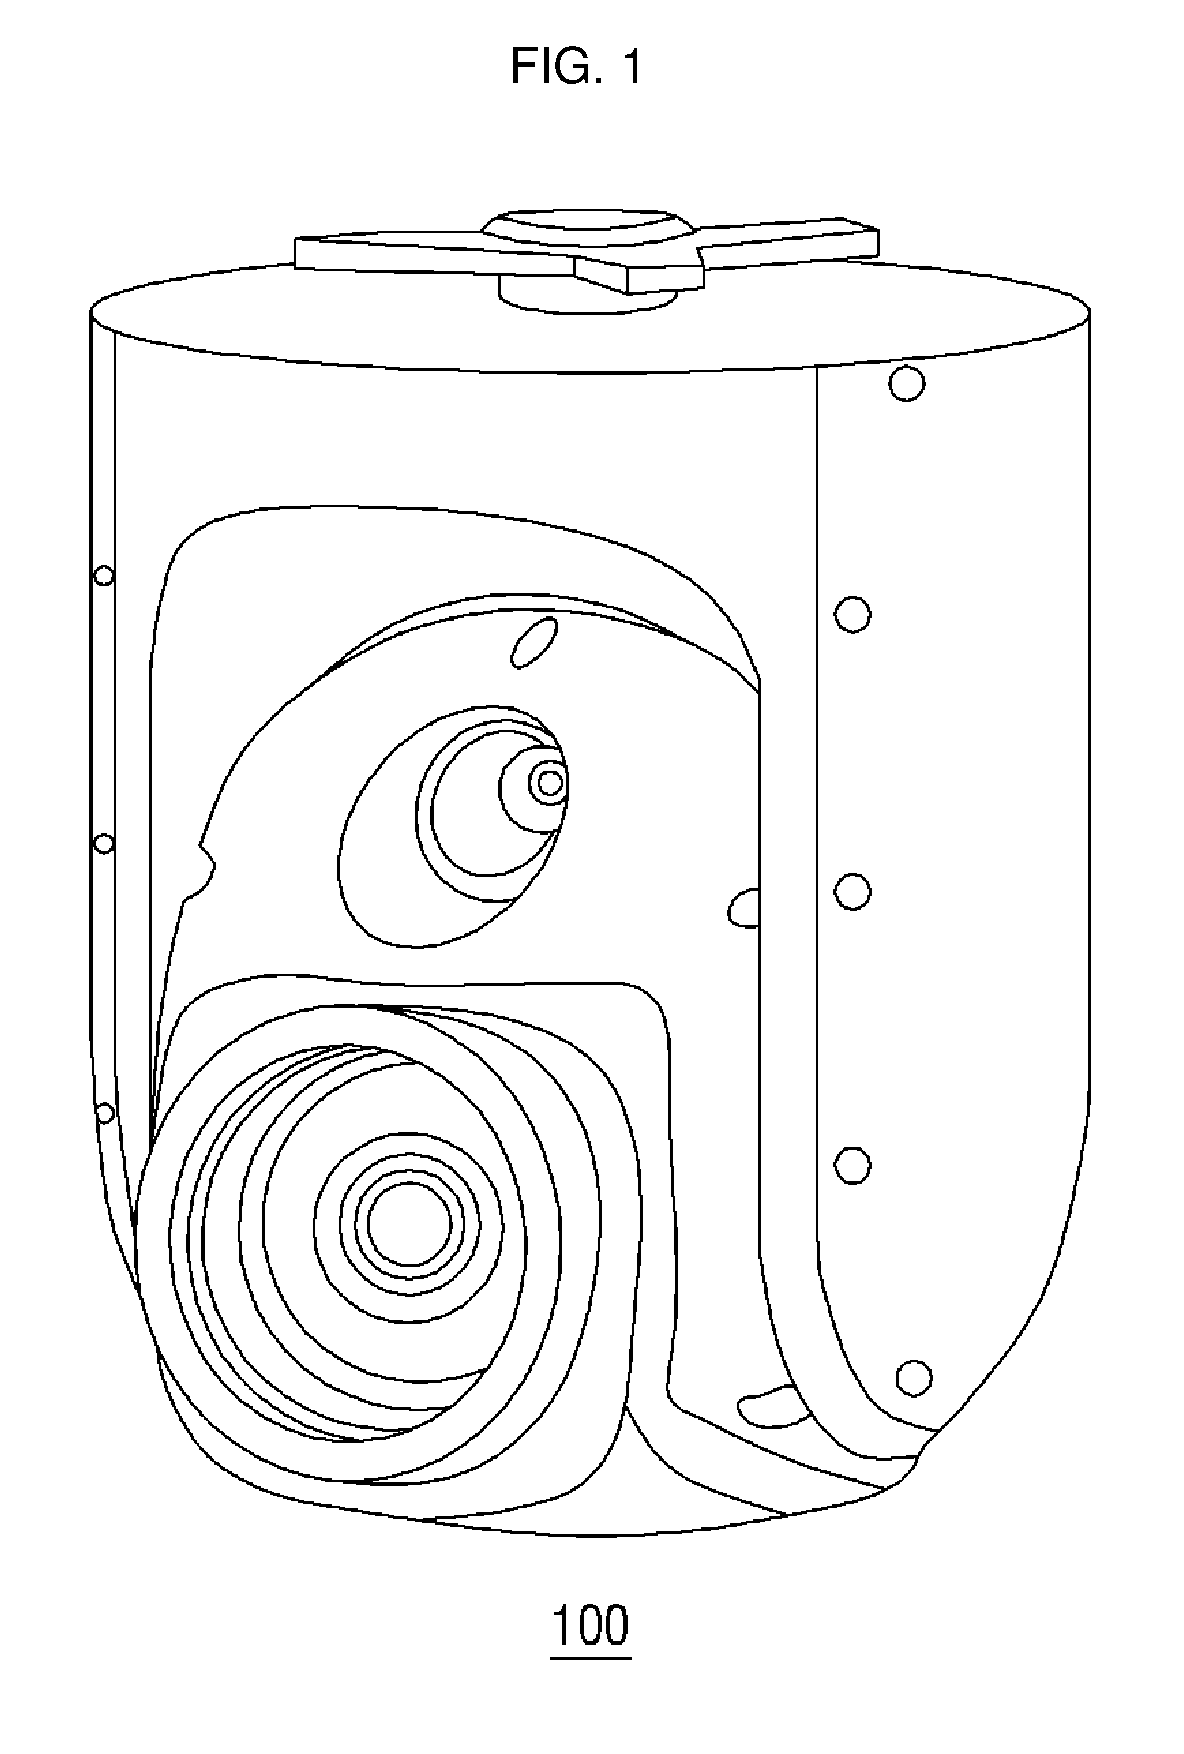 Dome-type three-axis gimbal